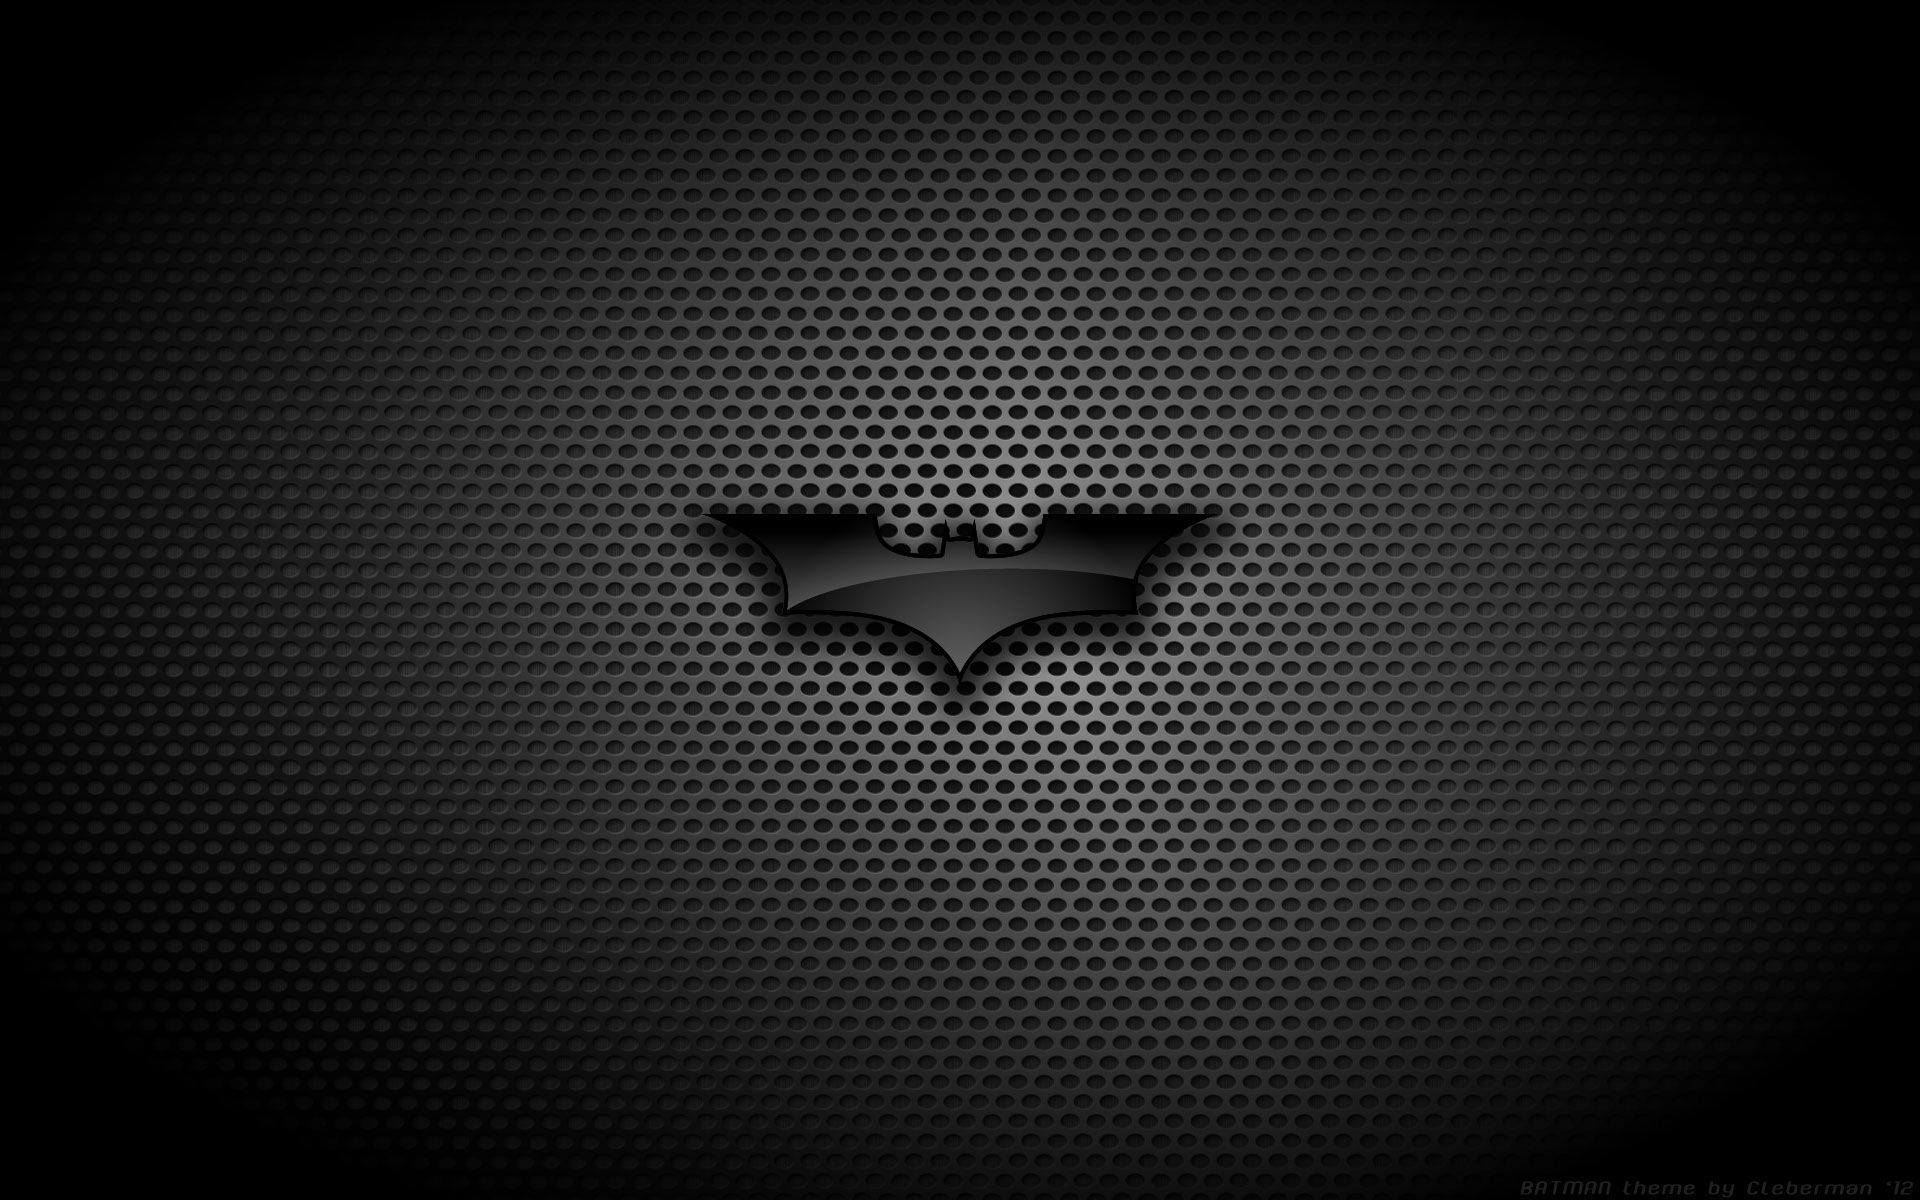 Batman Wallpaper HD 2016 download free Wallpapers, Backgrounds